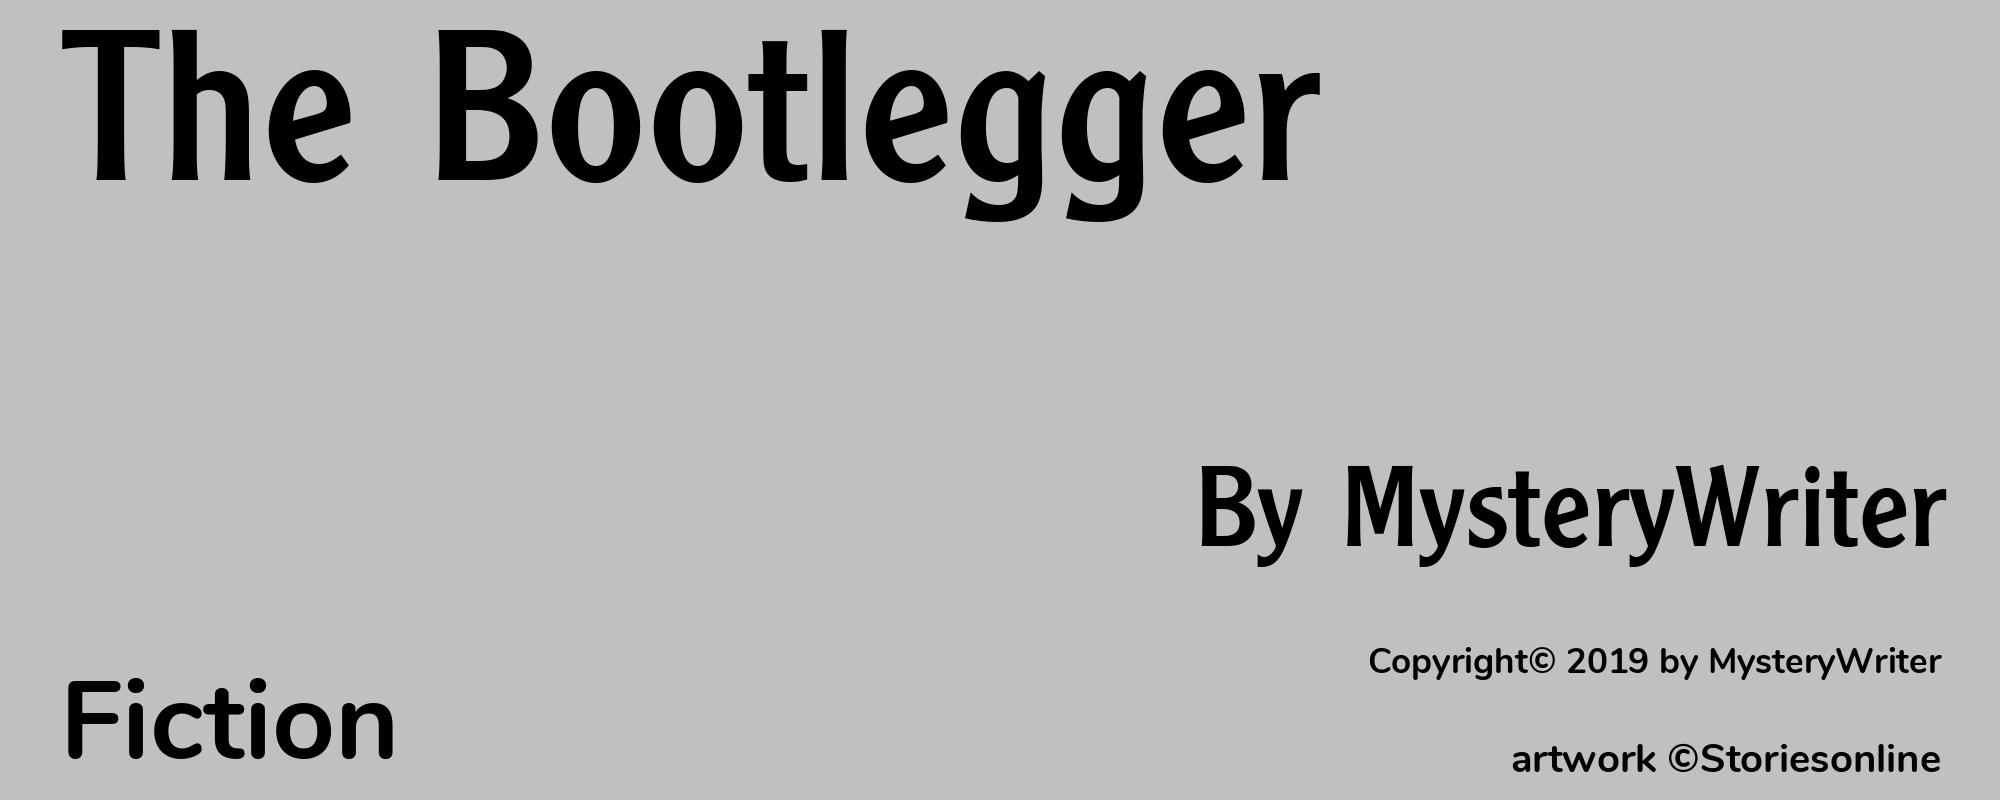 The Bootlegger - Cover